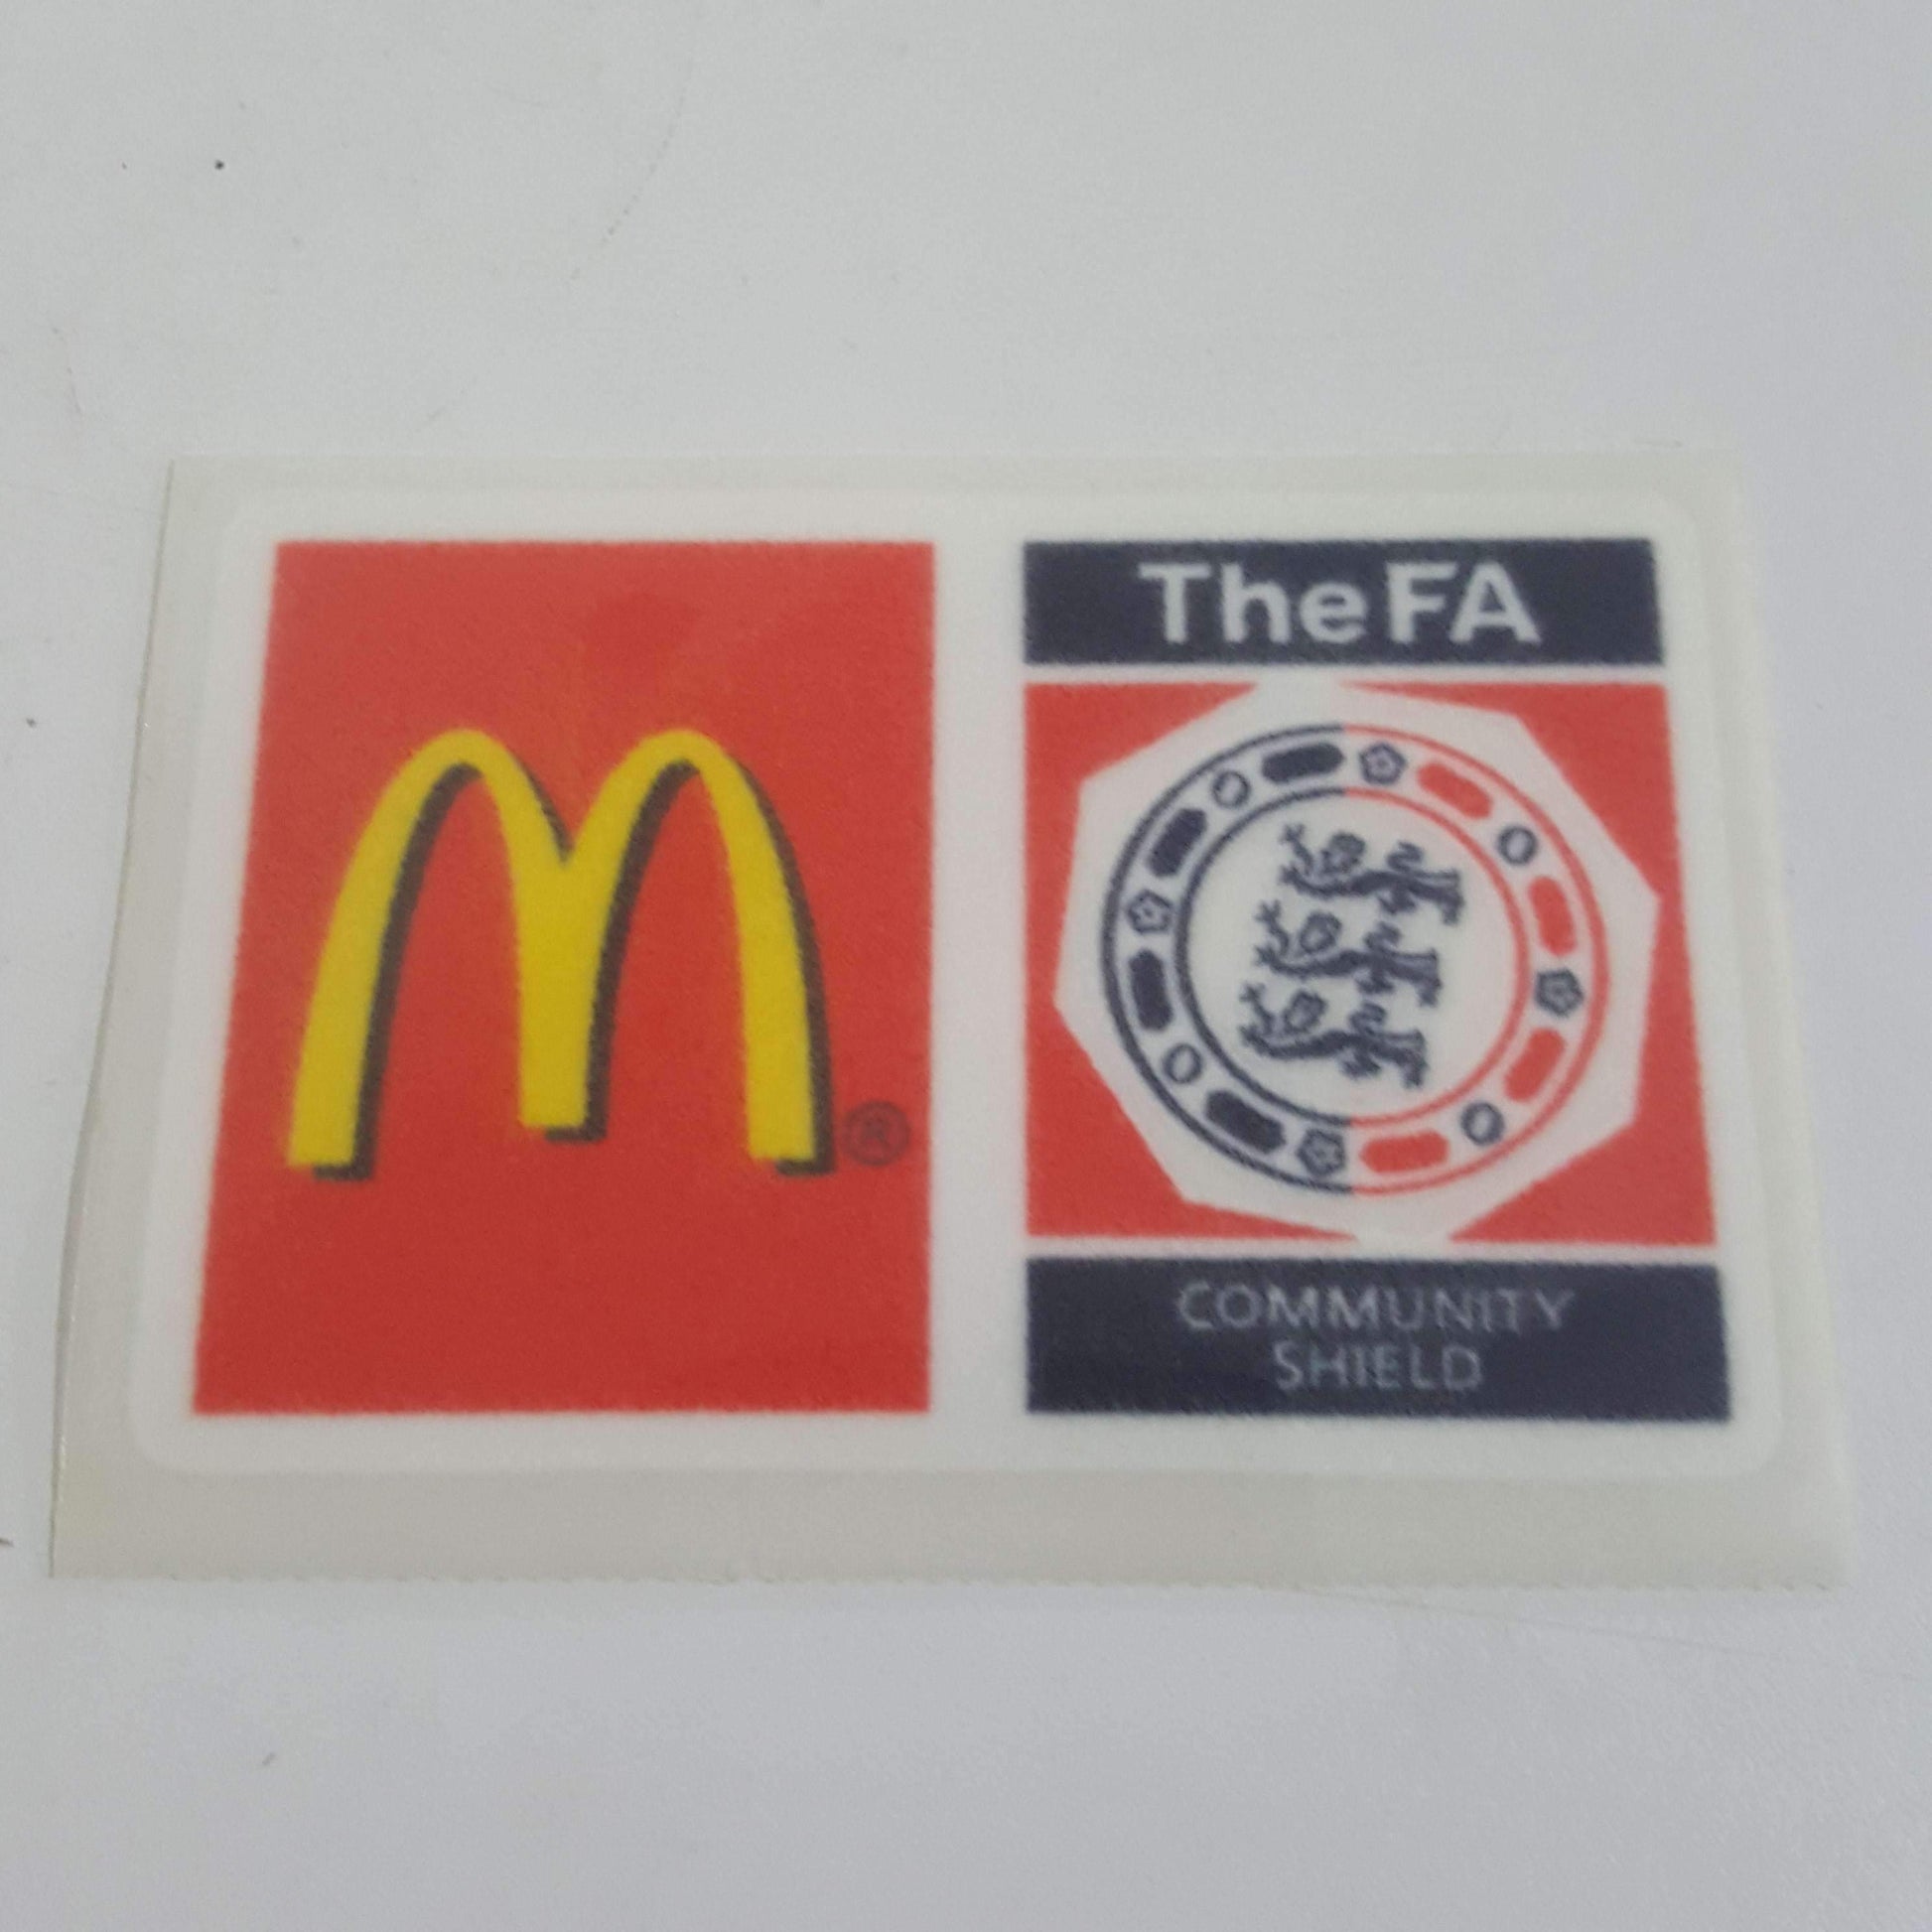 The F.A Community Shield McDonalds - ClassicFootballJersey